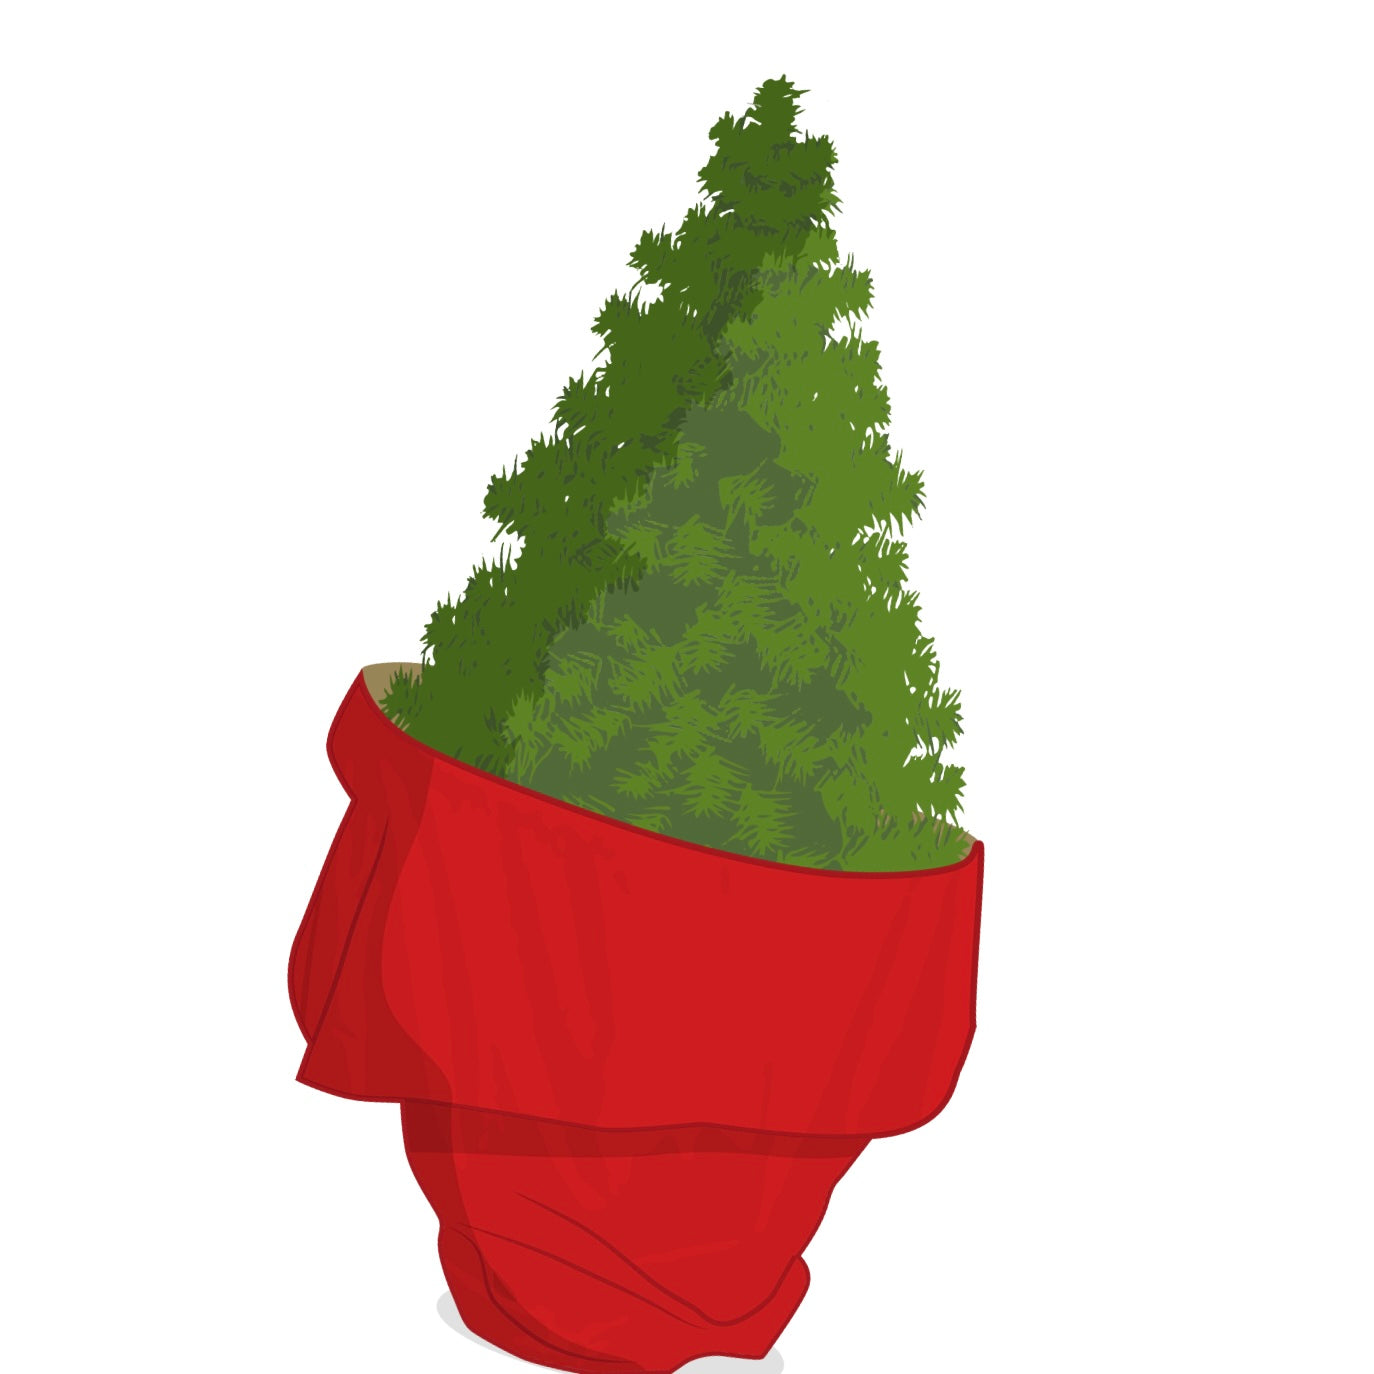 Illustration - Weihnachtsbaum komplett verpackt in unserer roten Tannenbaum Transporthülle treemova